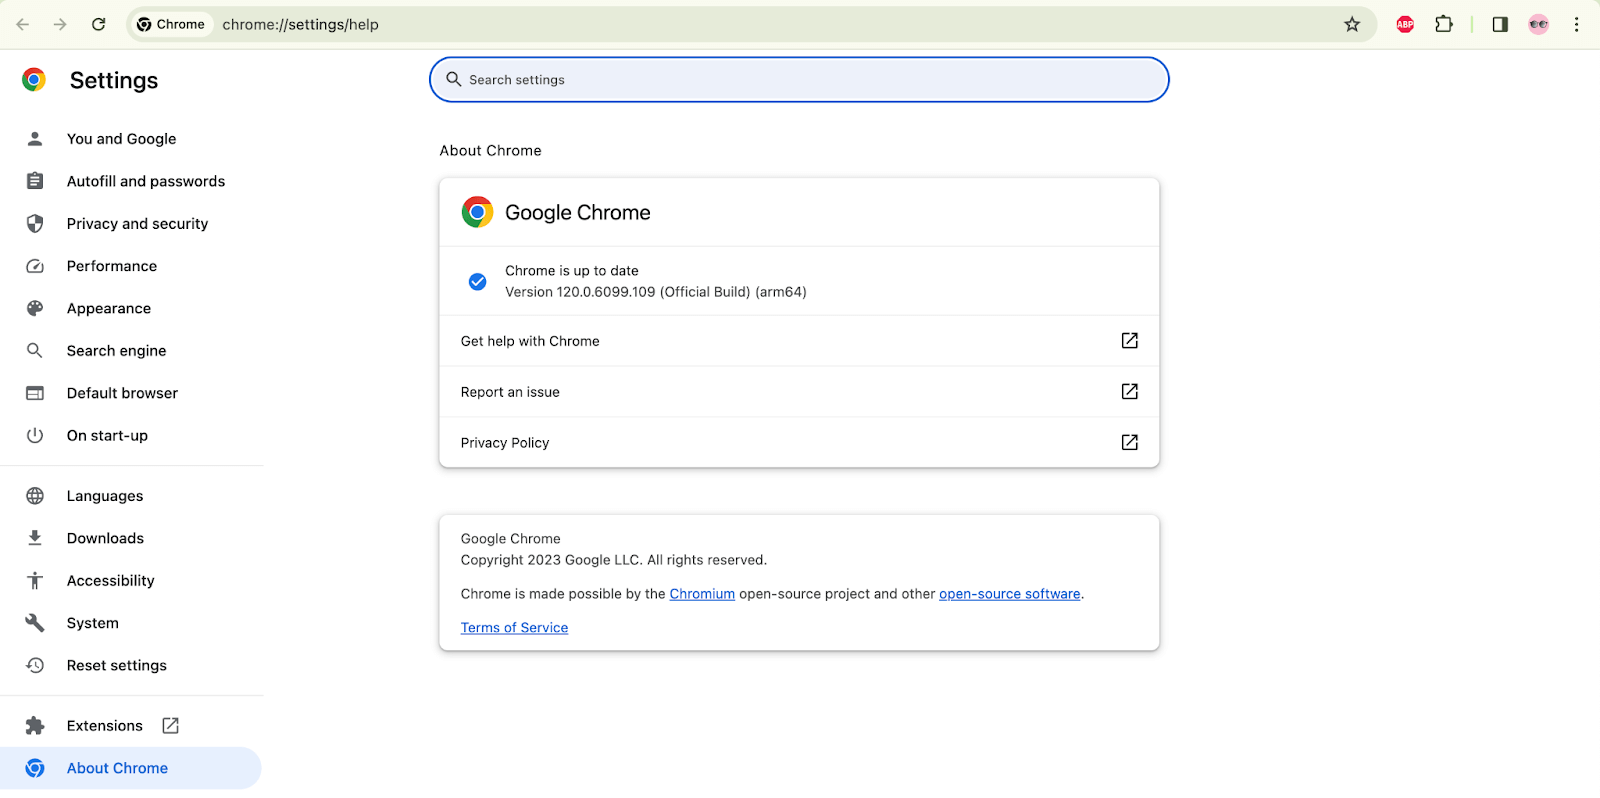 Chrome browser version 120